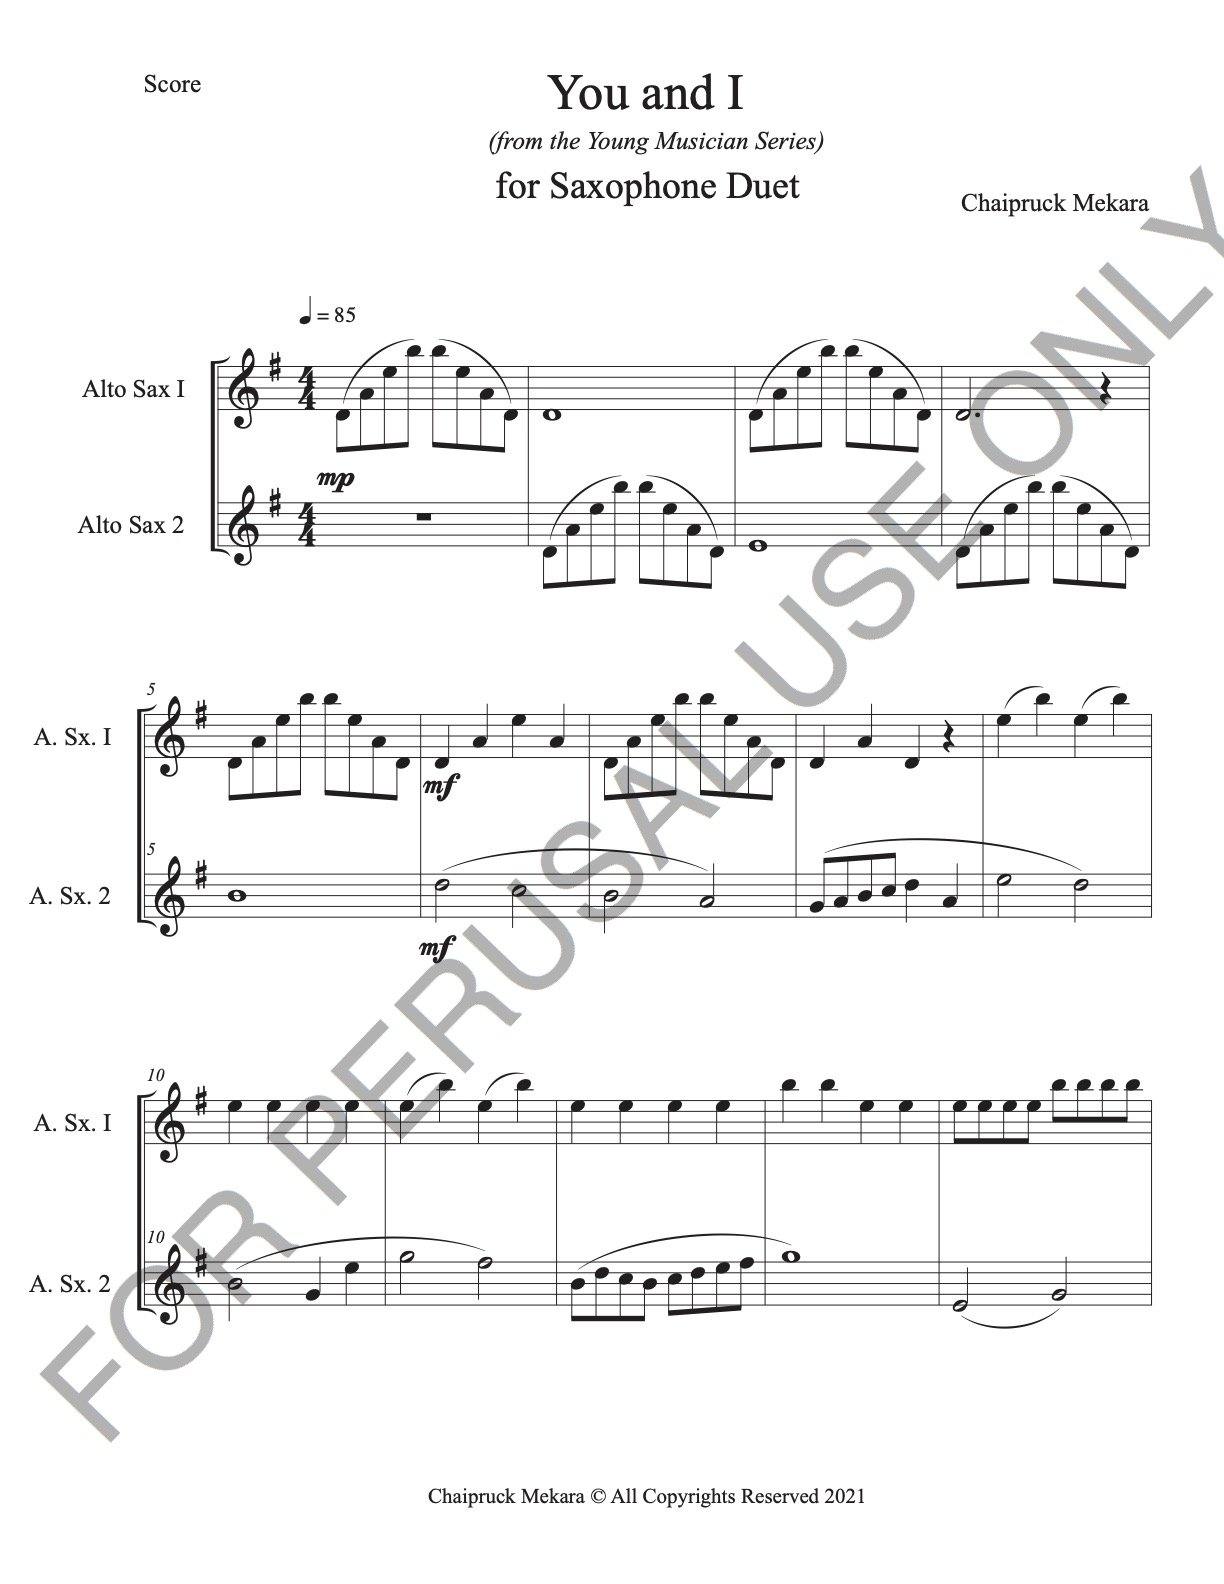 Alto Saxophone Duet sheet music - You and I - ChaipruckMekara